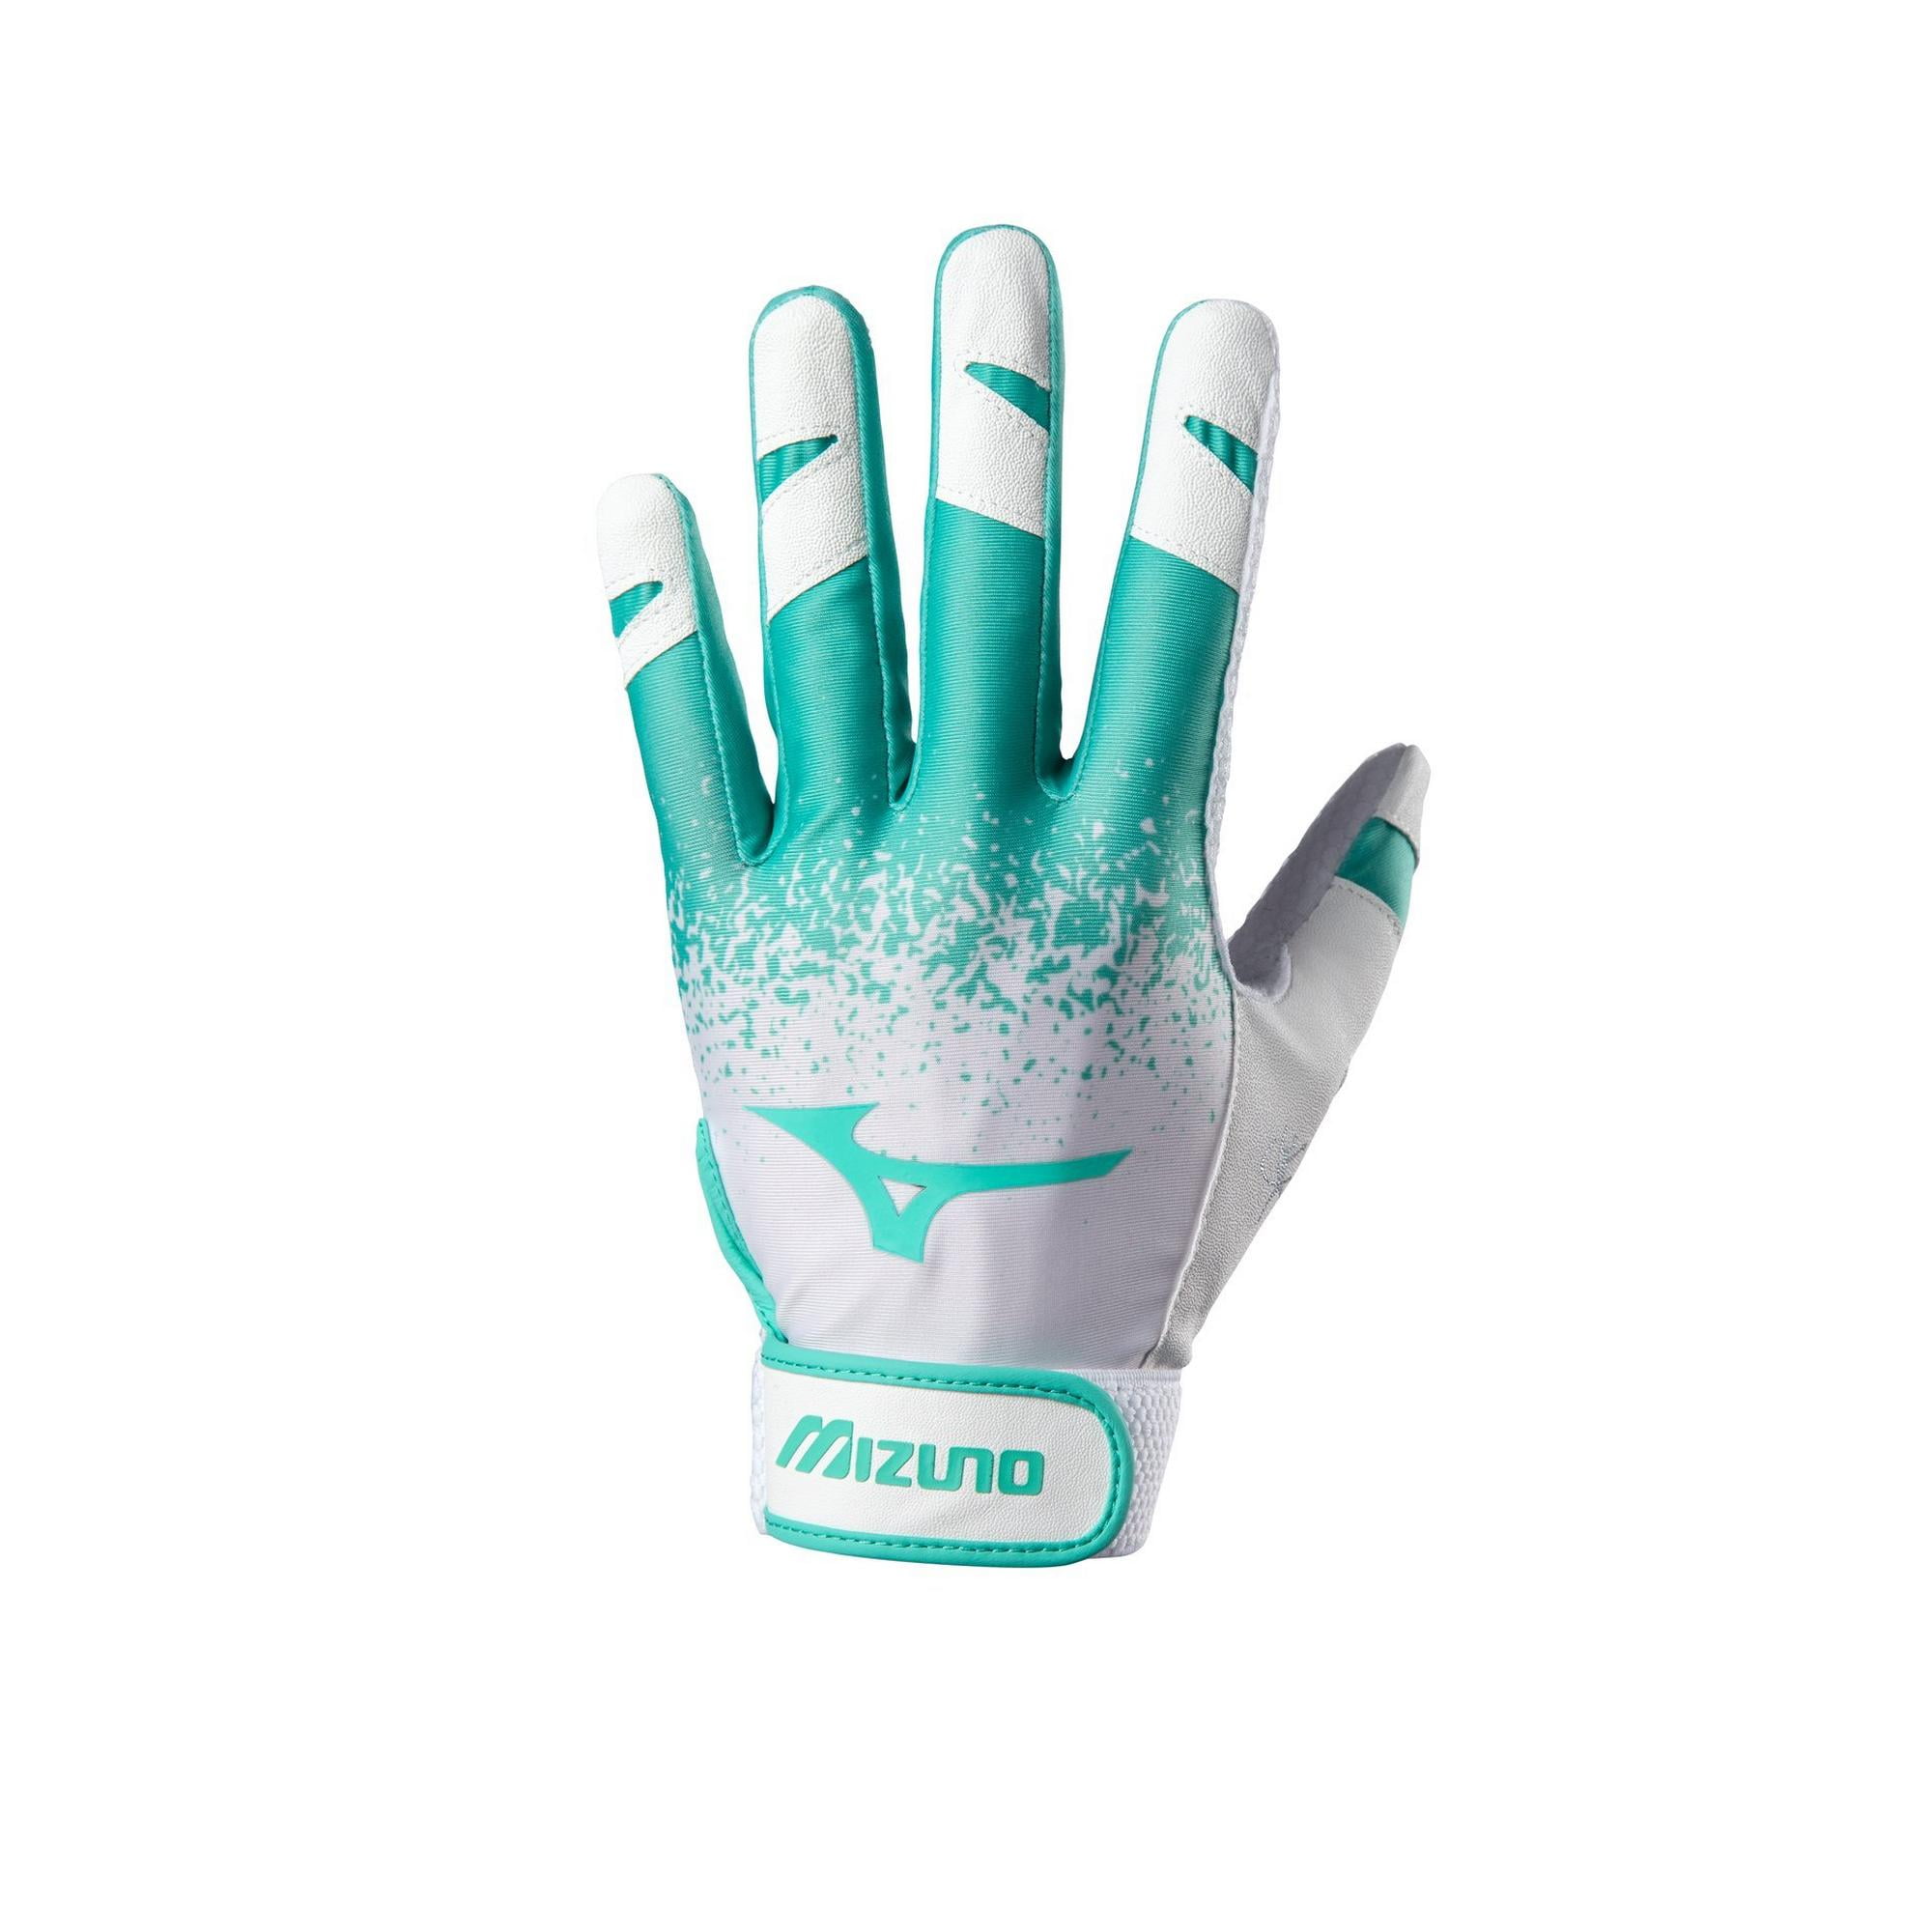 NEW Women’s Mizuno Finch Batting Gloves Gray Blue Black White Size S M or L 